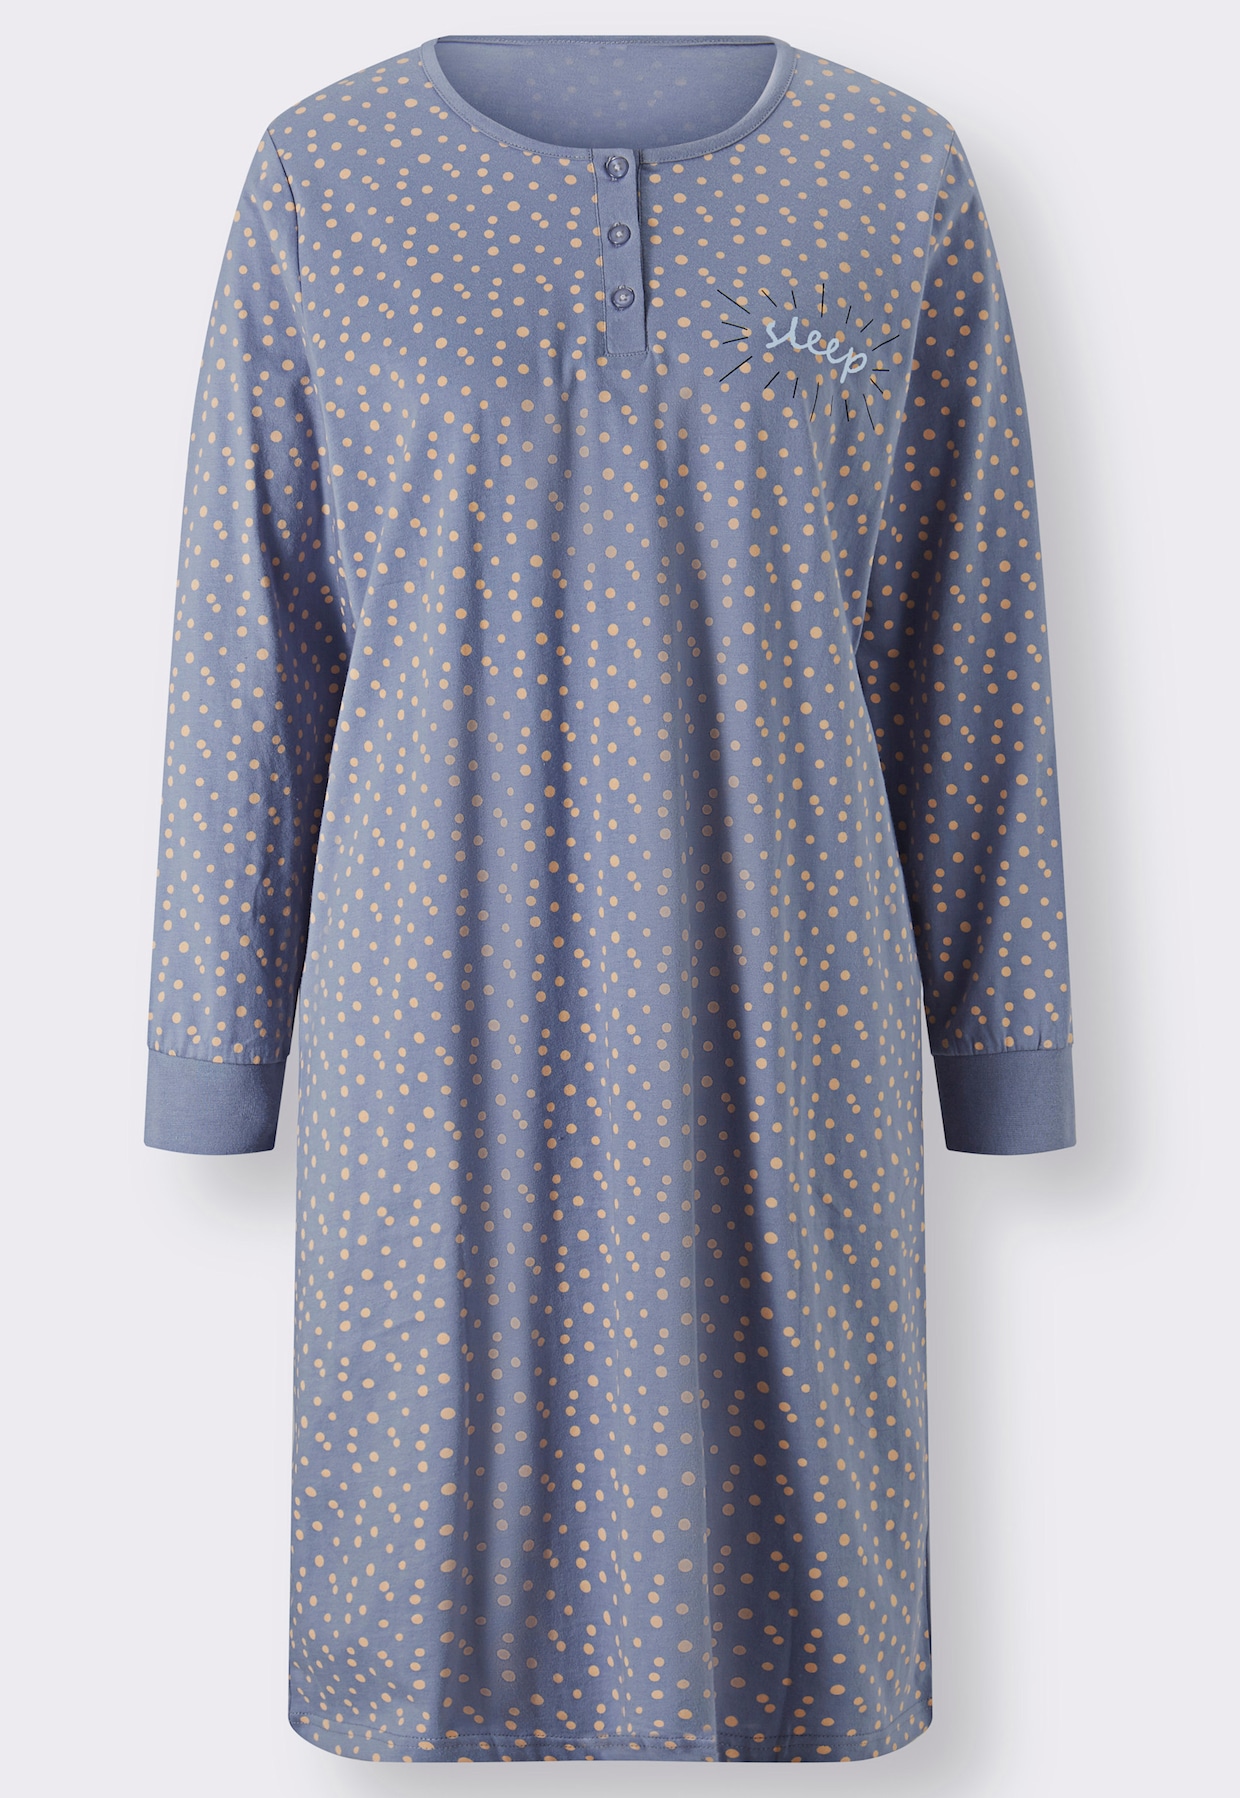 wäschepur Sleepshirt - taubenblau